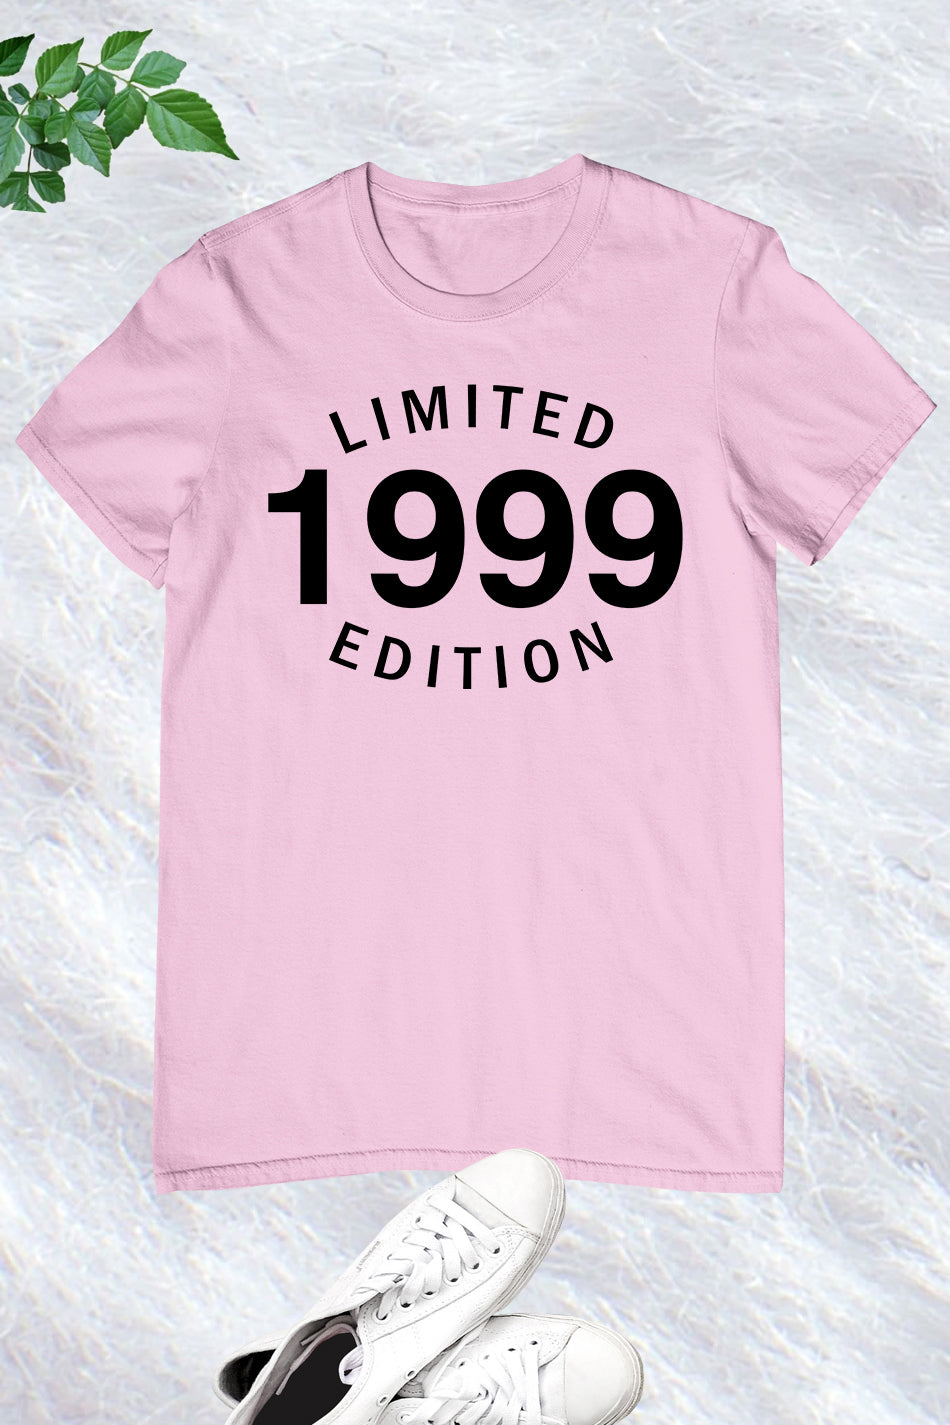 Limited 1999 Edition 25th Birthday Shirts